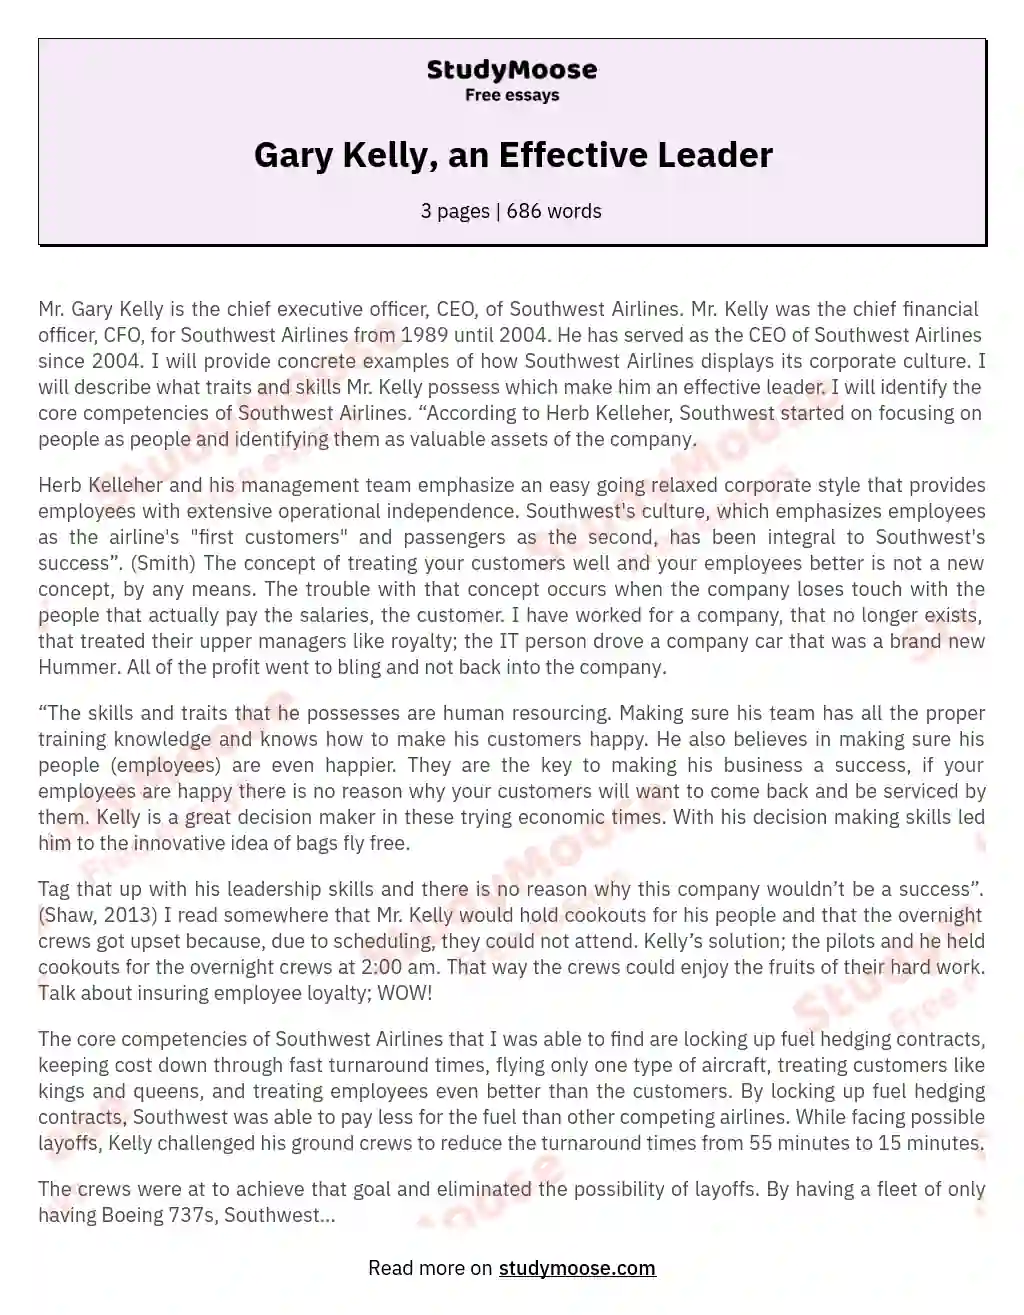 Gary Kelly, an Effective Leader